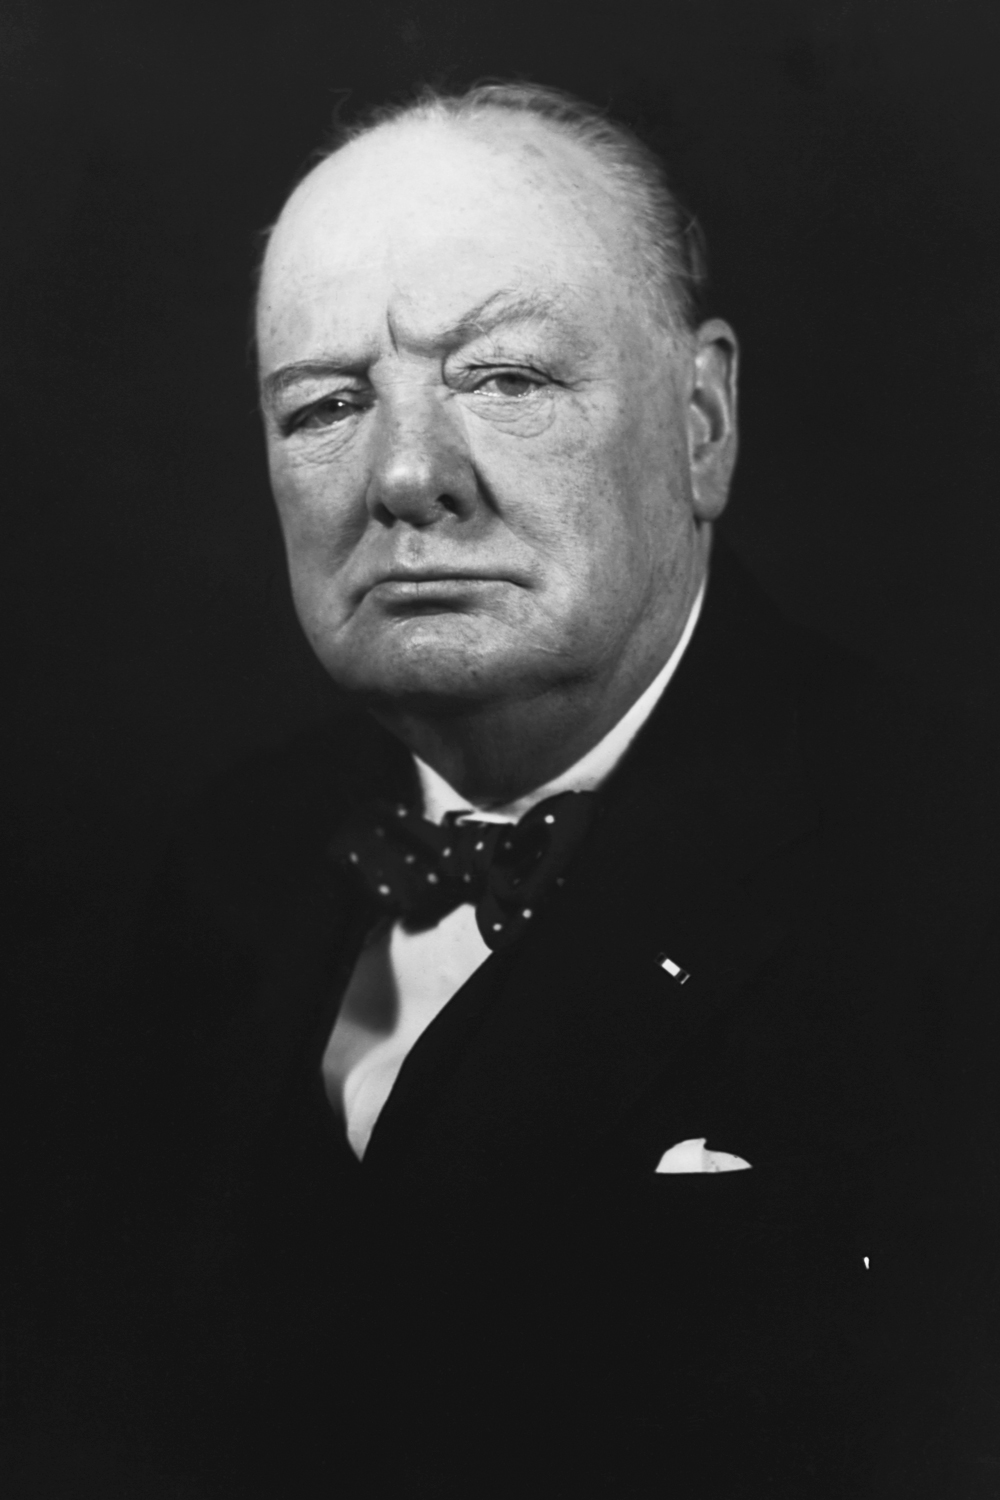 A photo of Winston Leonard Spencer Churchill